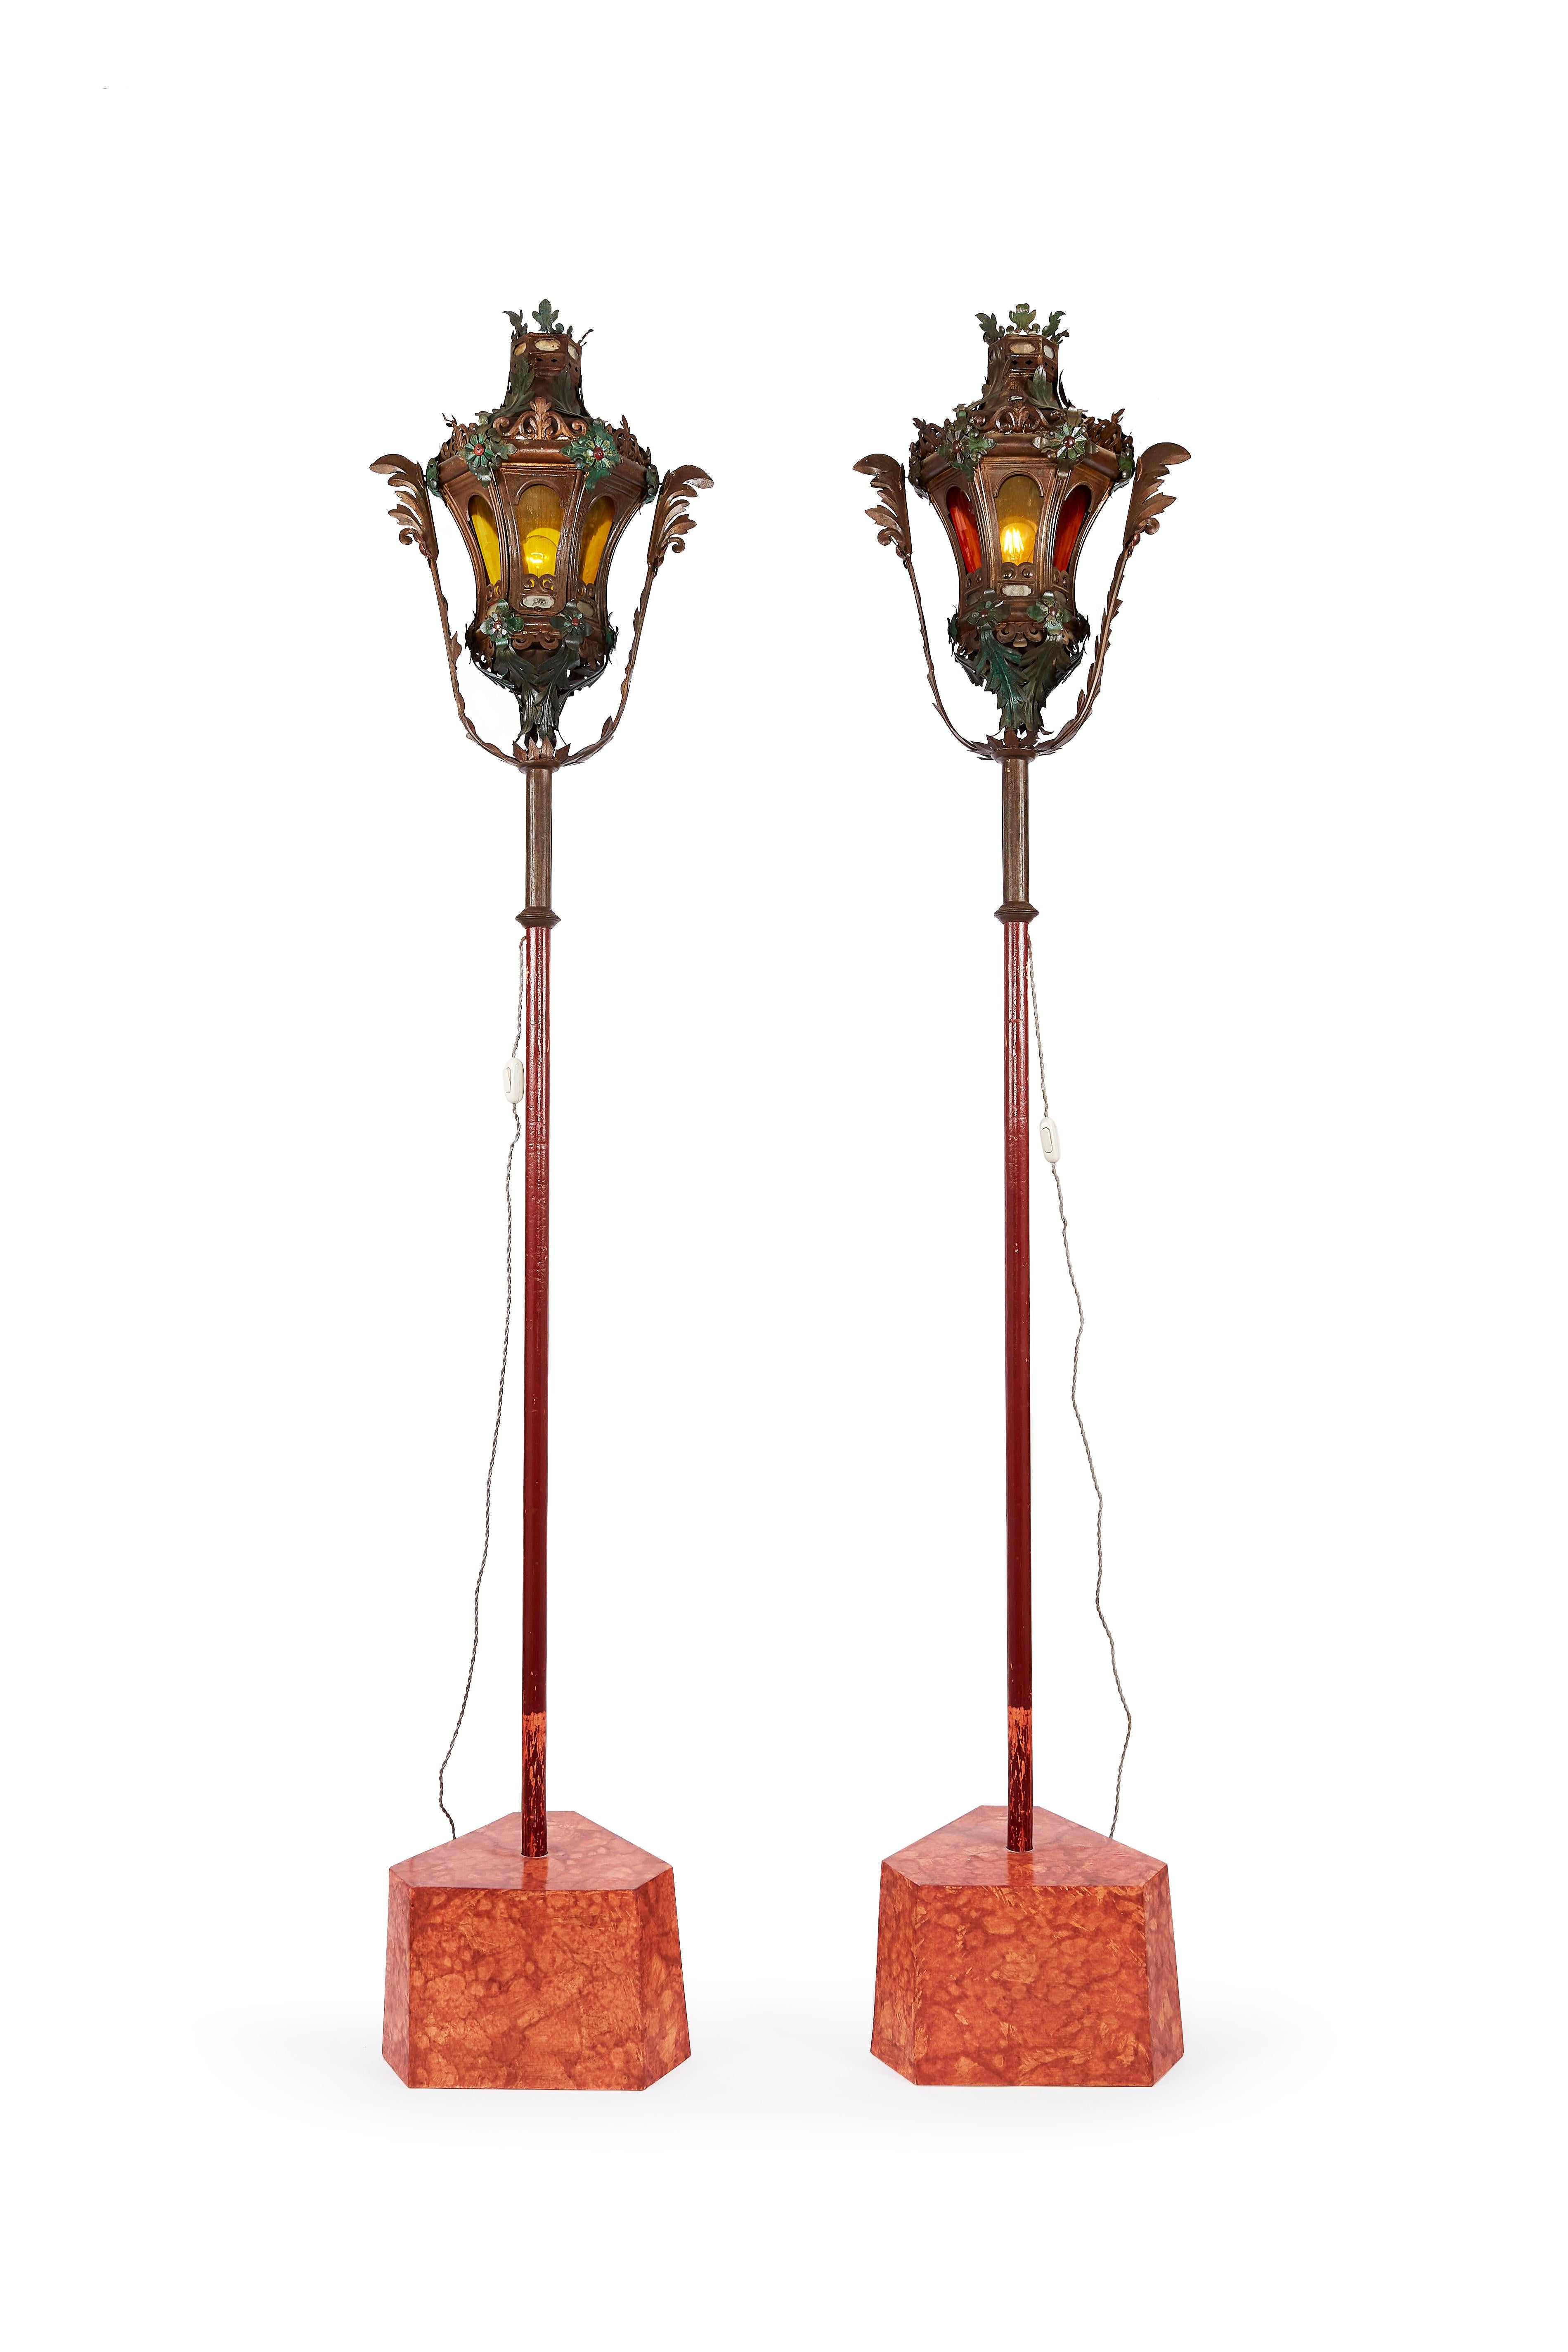 Forged Pair of Venetian Lanterns 19th Century Italian Gondola Lamps Baroque Style